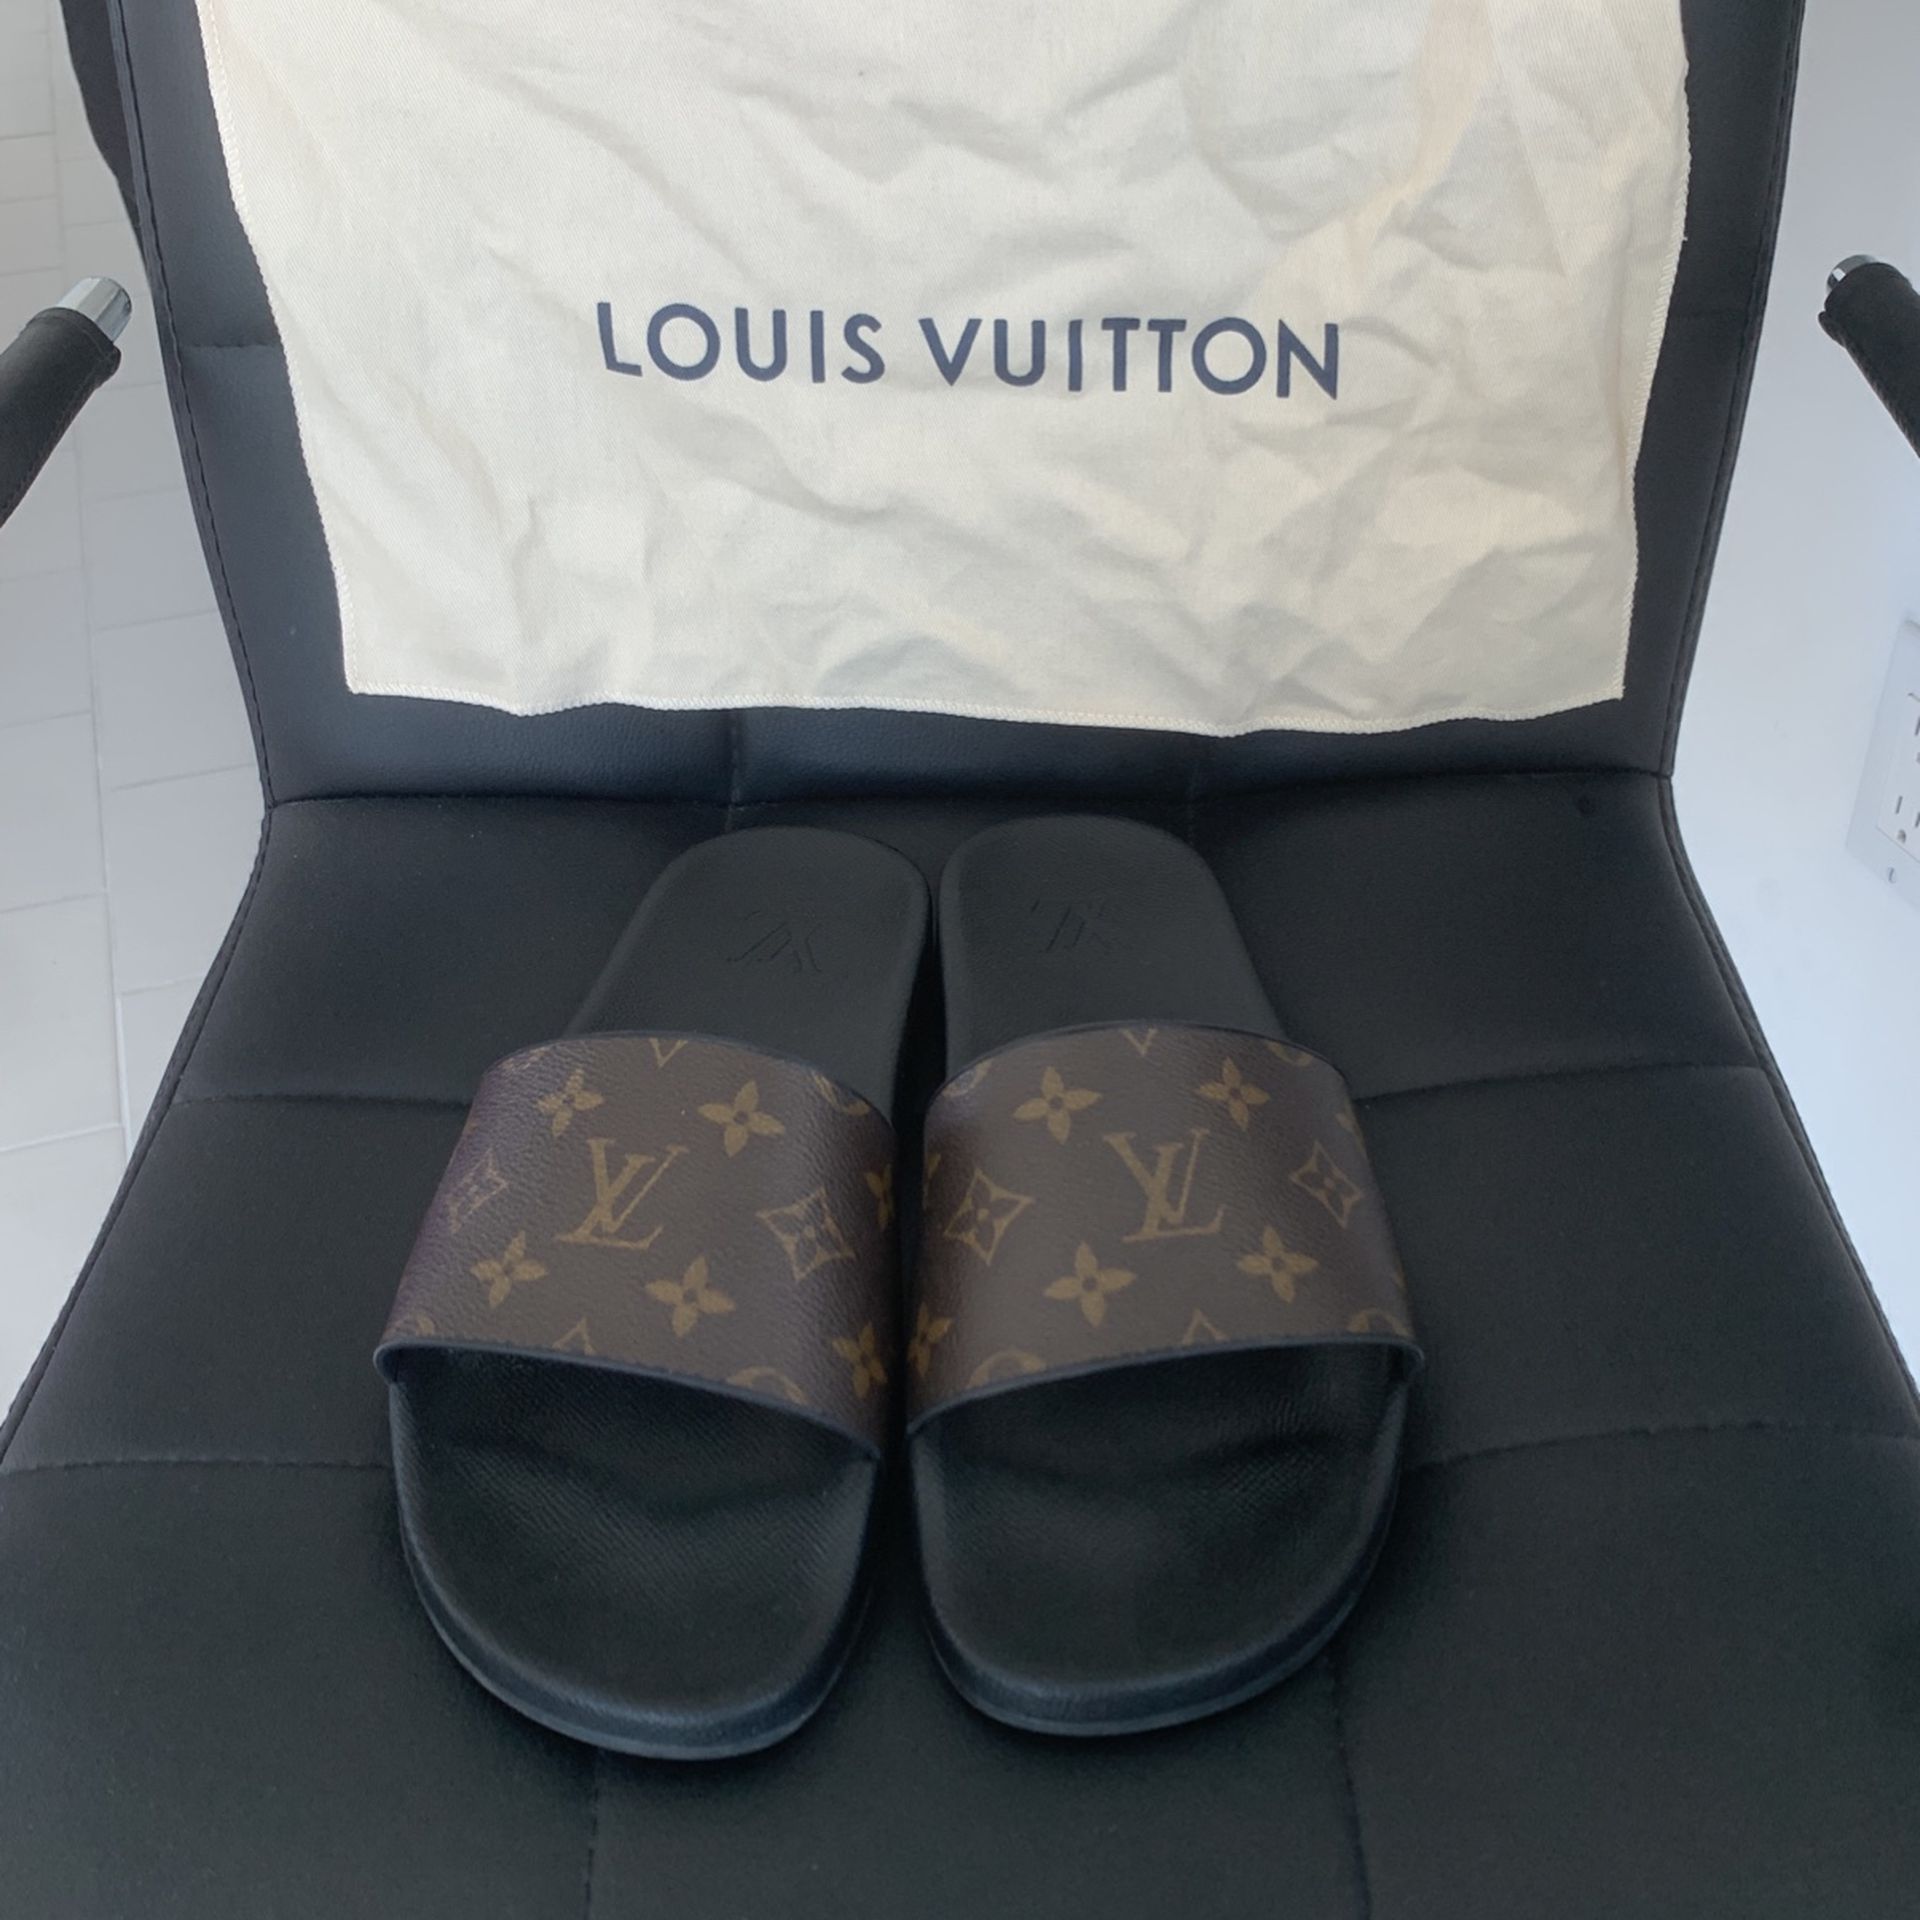  Authentic Louis Vuitton Slides (worn twice)